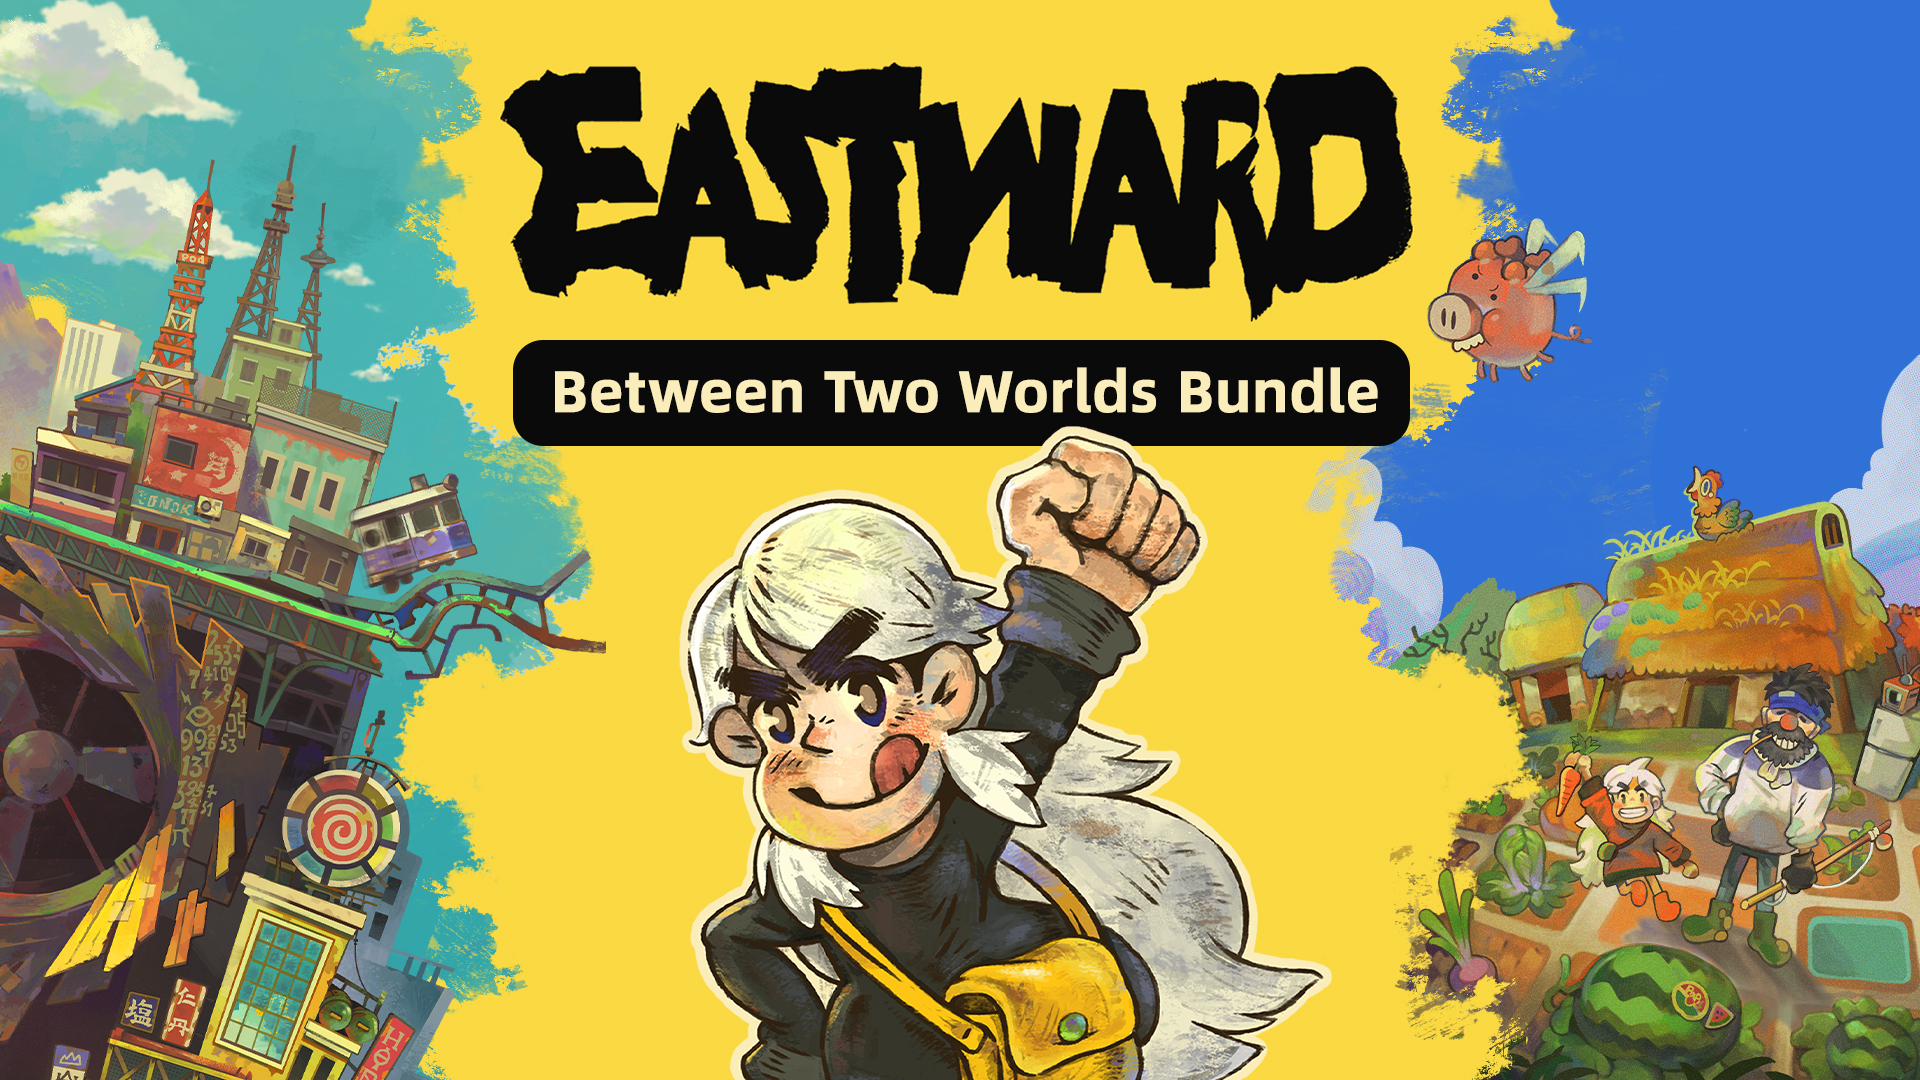 Trader Games - EASTWARD SWITCH EURO NEW (EN/FR) on Nintendo Switch